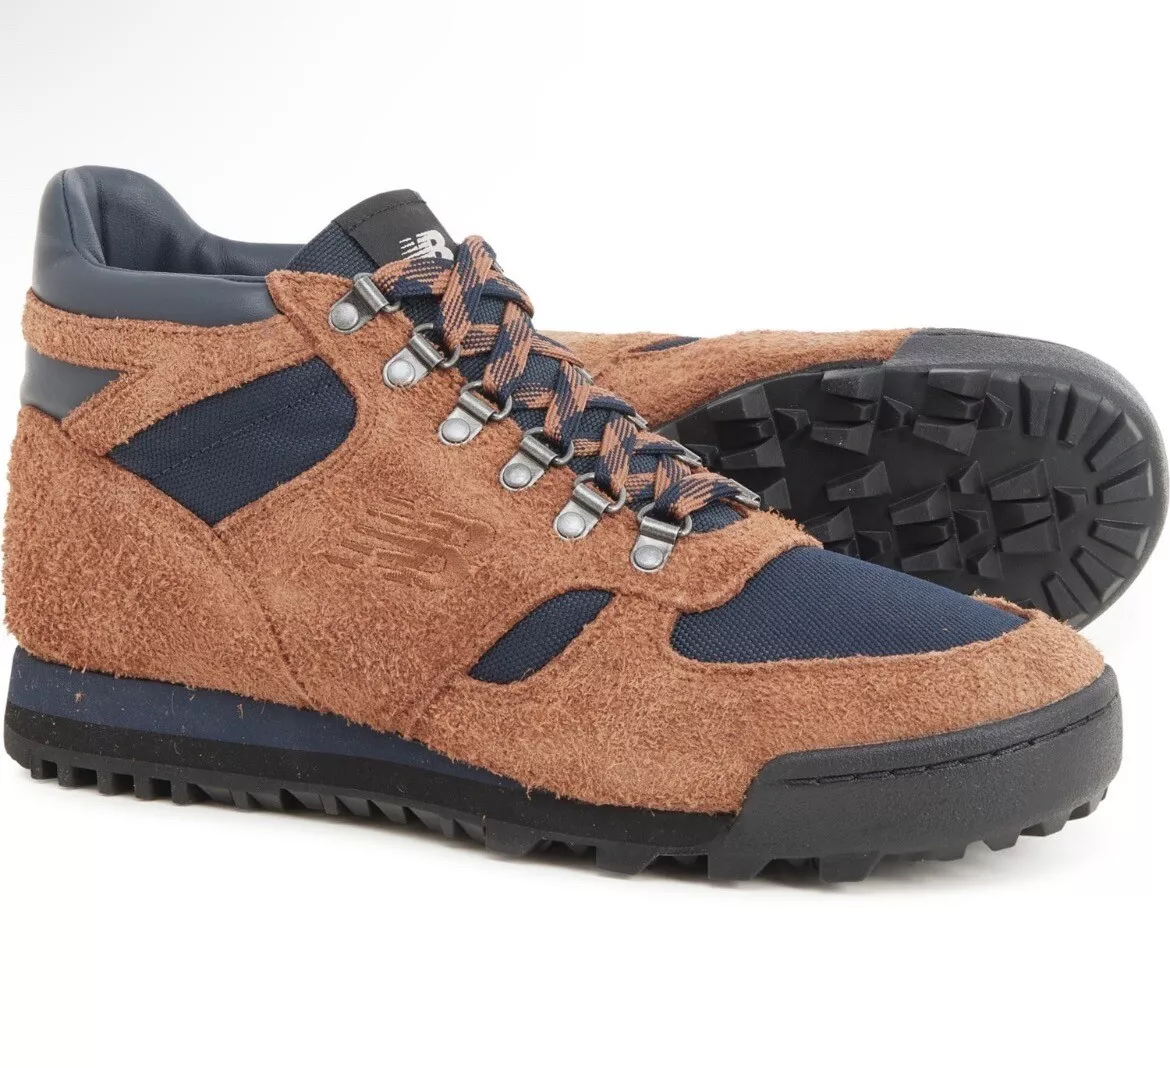 New Balance Rainier True Brown / Black Mens Size 8.5 Sneakers Hiking Boots  NEW